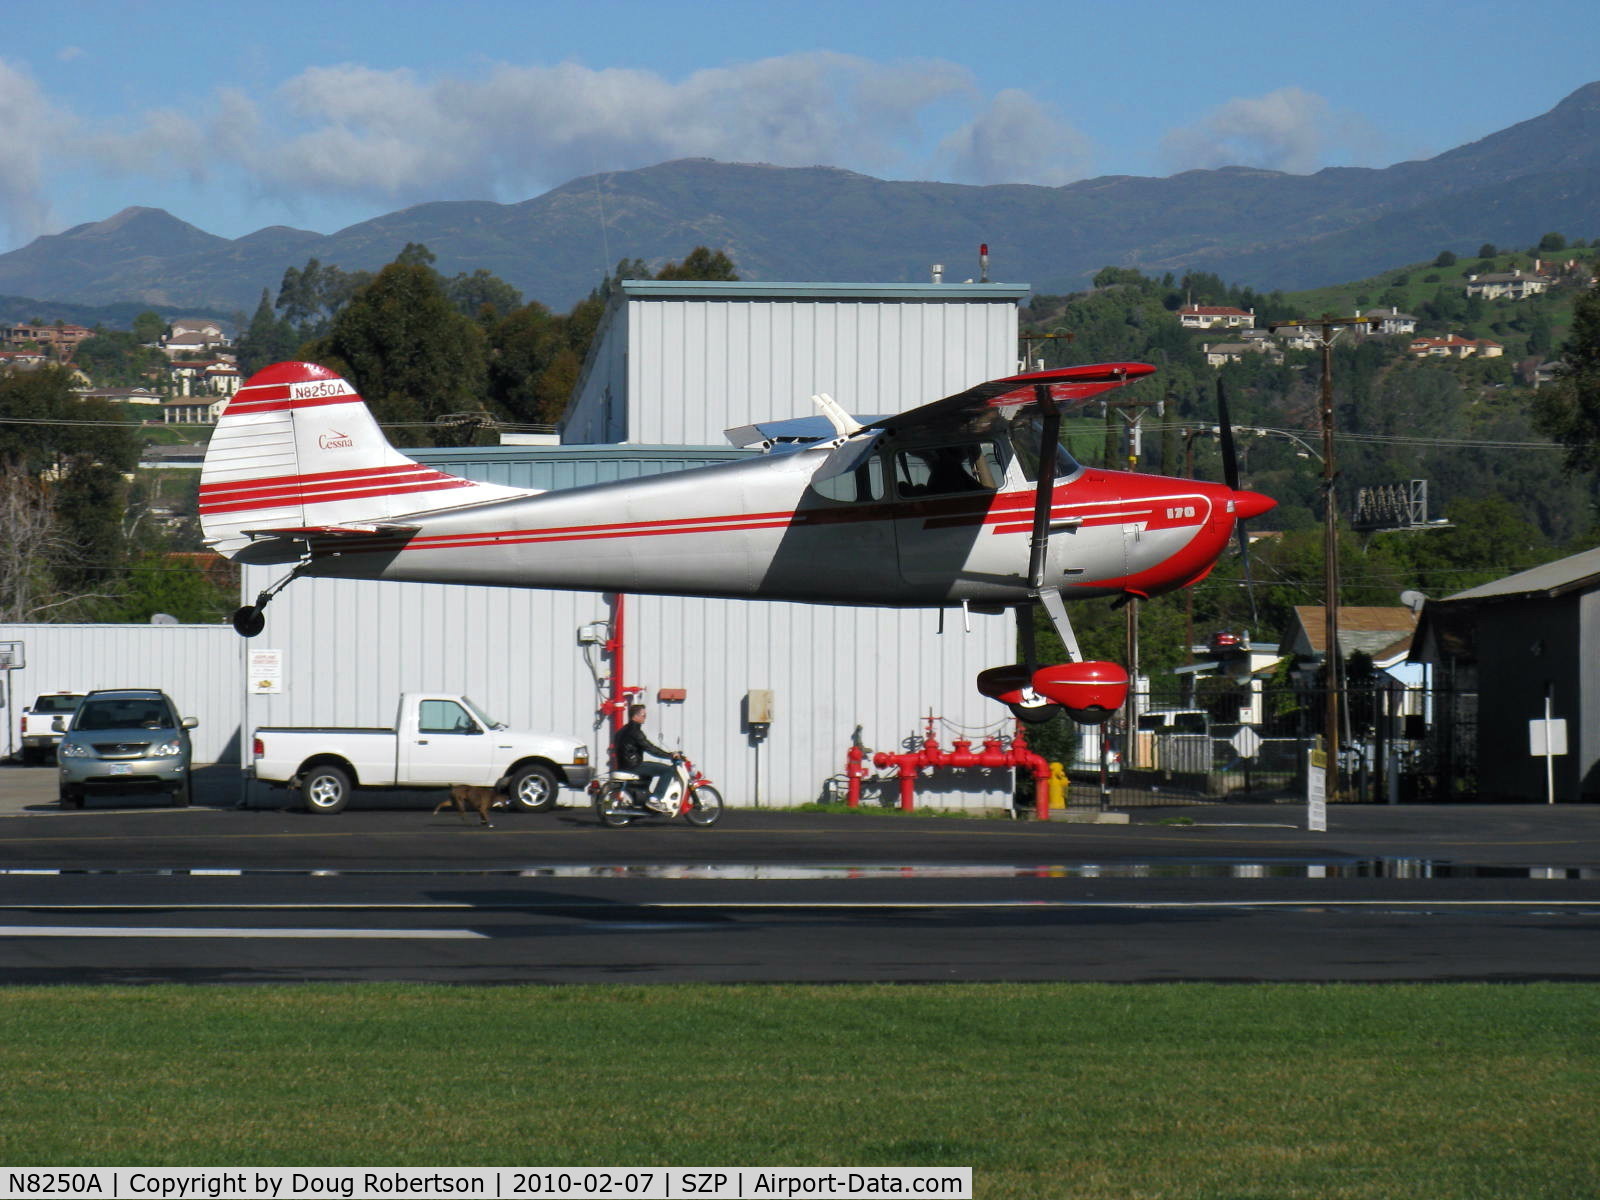 N8250A, 1952 Cessna 170B C/N 25102, 1952 Cessna 170B, Continental C-145-2 145 Hp, landing Rwy 04